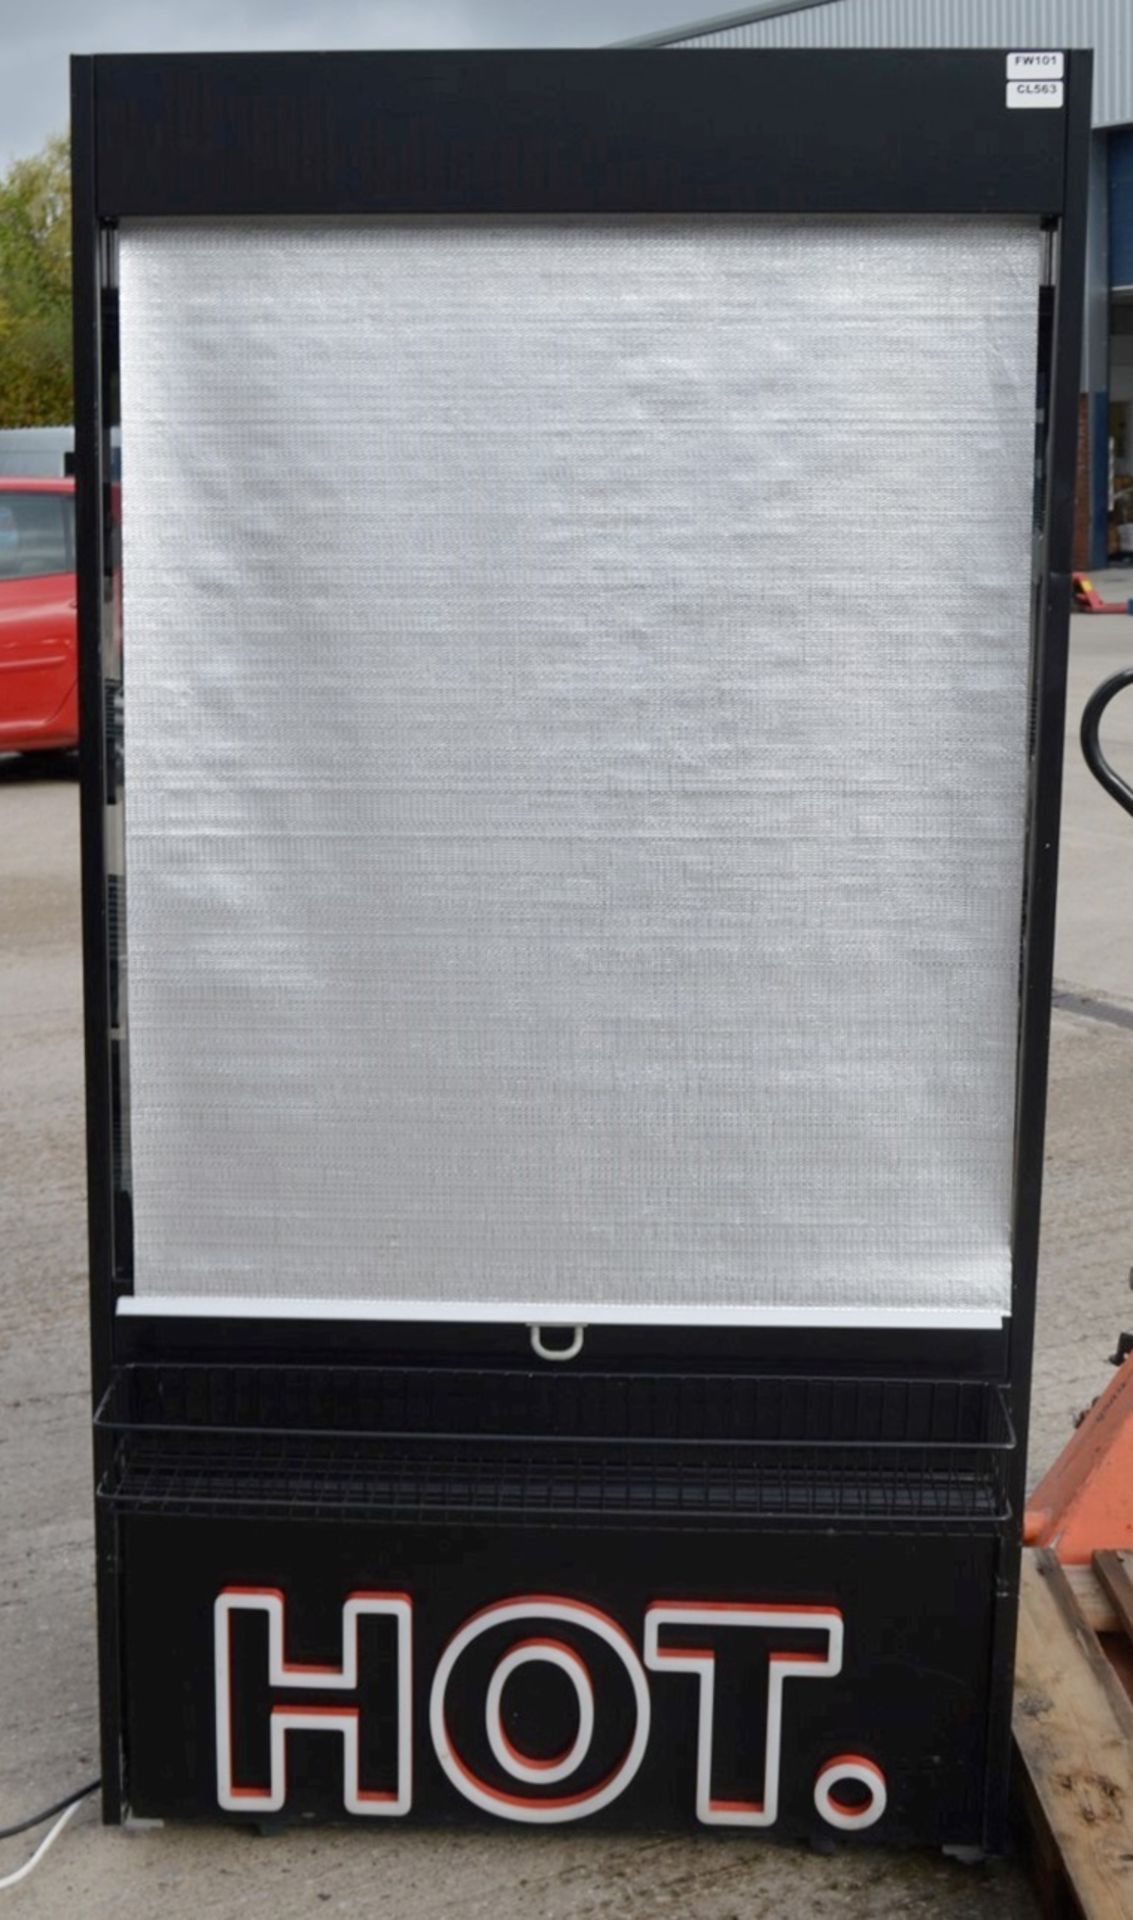 1 x Heated Multideck Display Unit With Illuminated 'HOT' Signage On The Front - Image 12 of 13